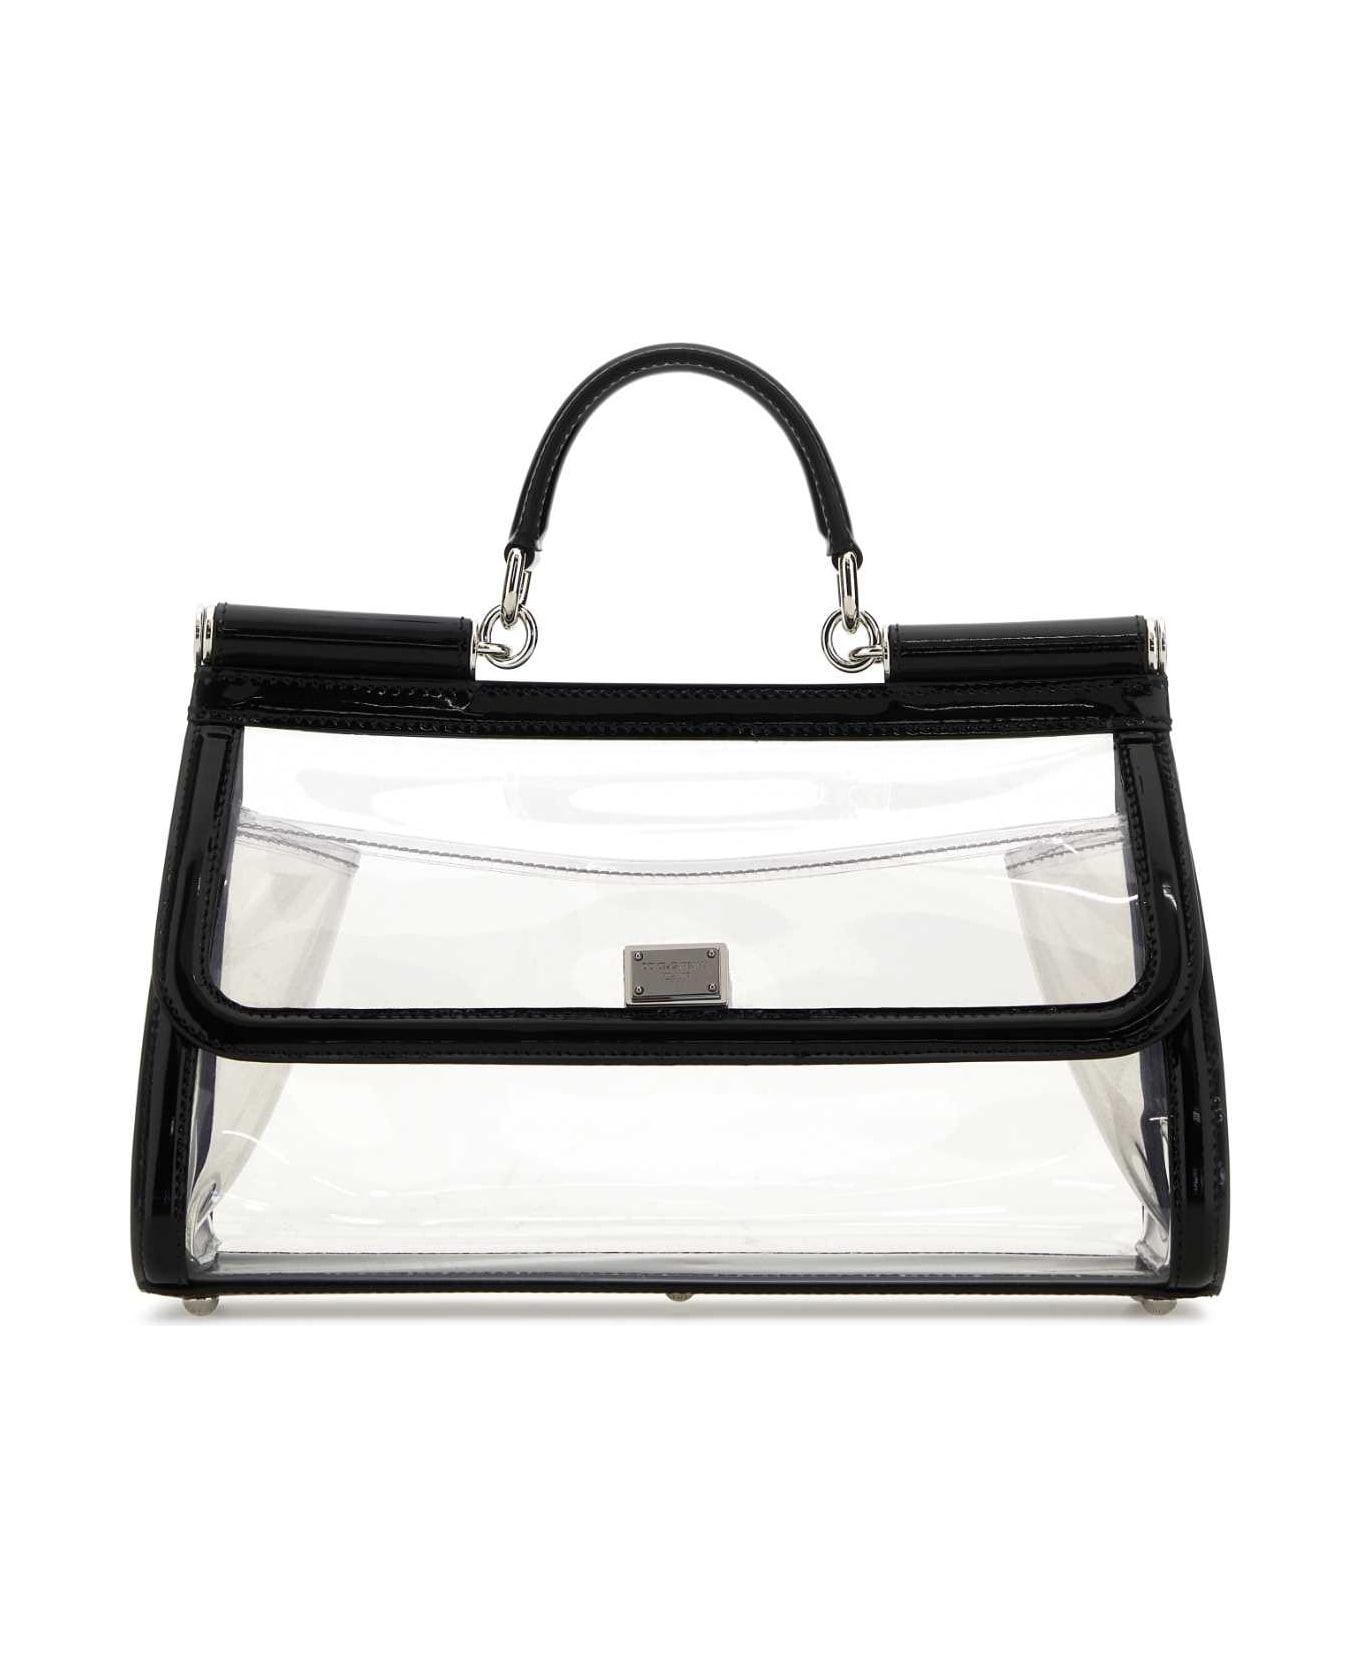 Dolce & Gabbana Two-tone Pvc And Leather Medium Sicily Handbag - TRASPARENTENERO トートバッグ